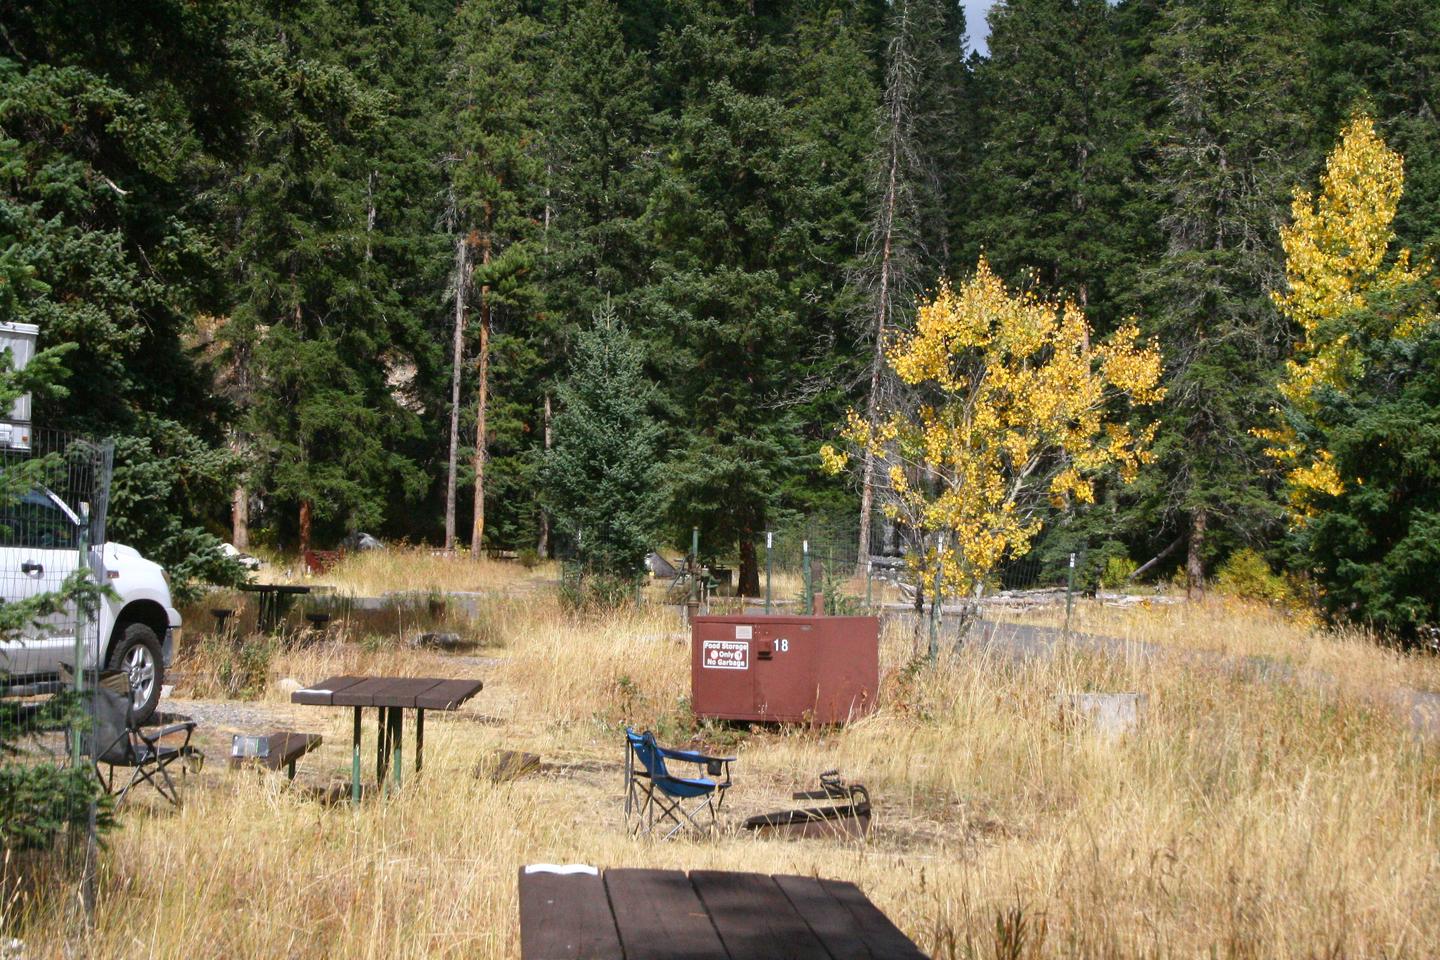 Pebble Creek Campground site #18.Pebble Creek Campground site #18